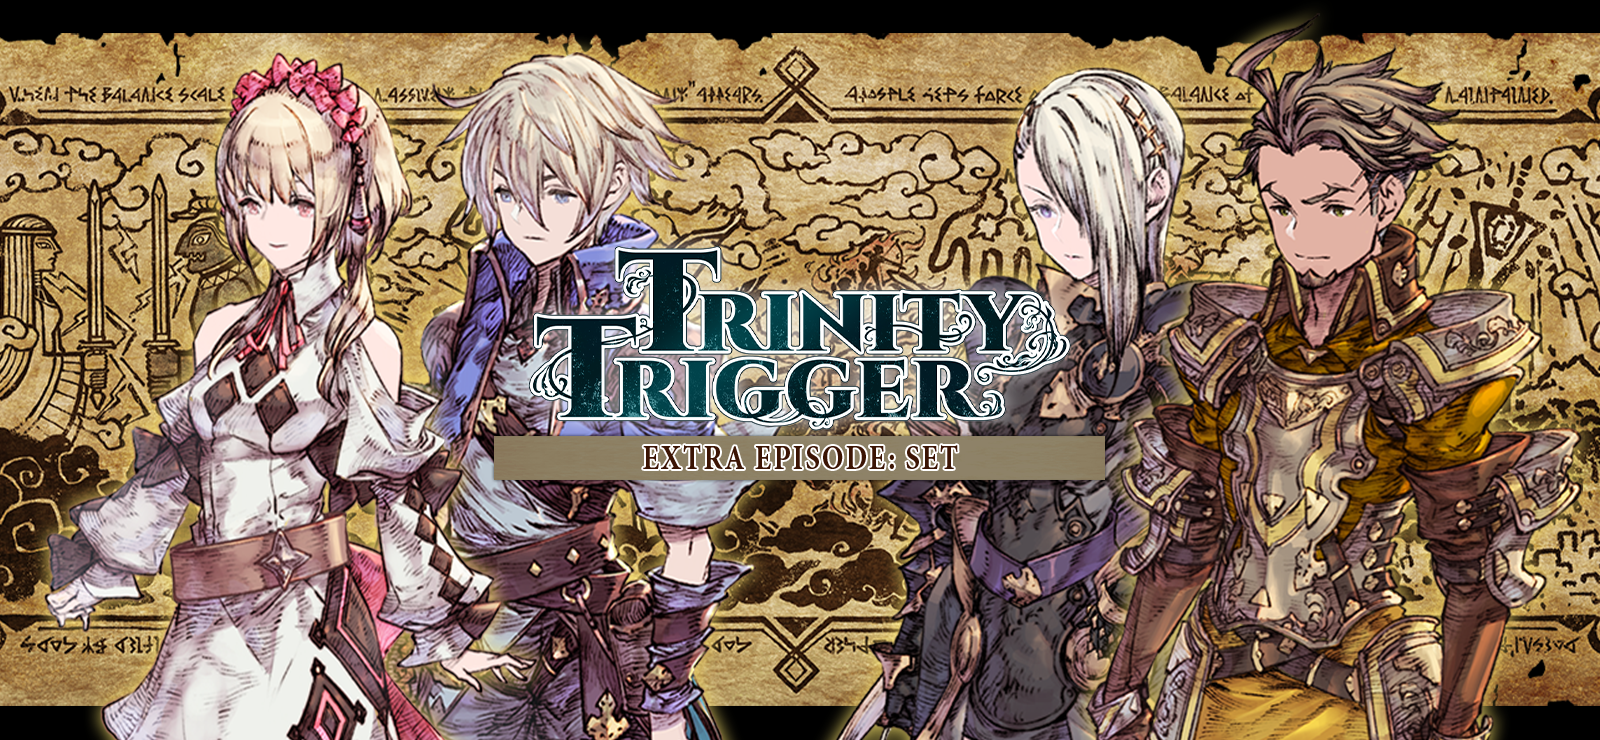 Trinity Trigger - Extra Episode Set